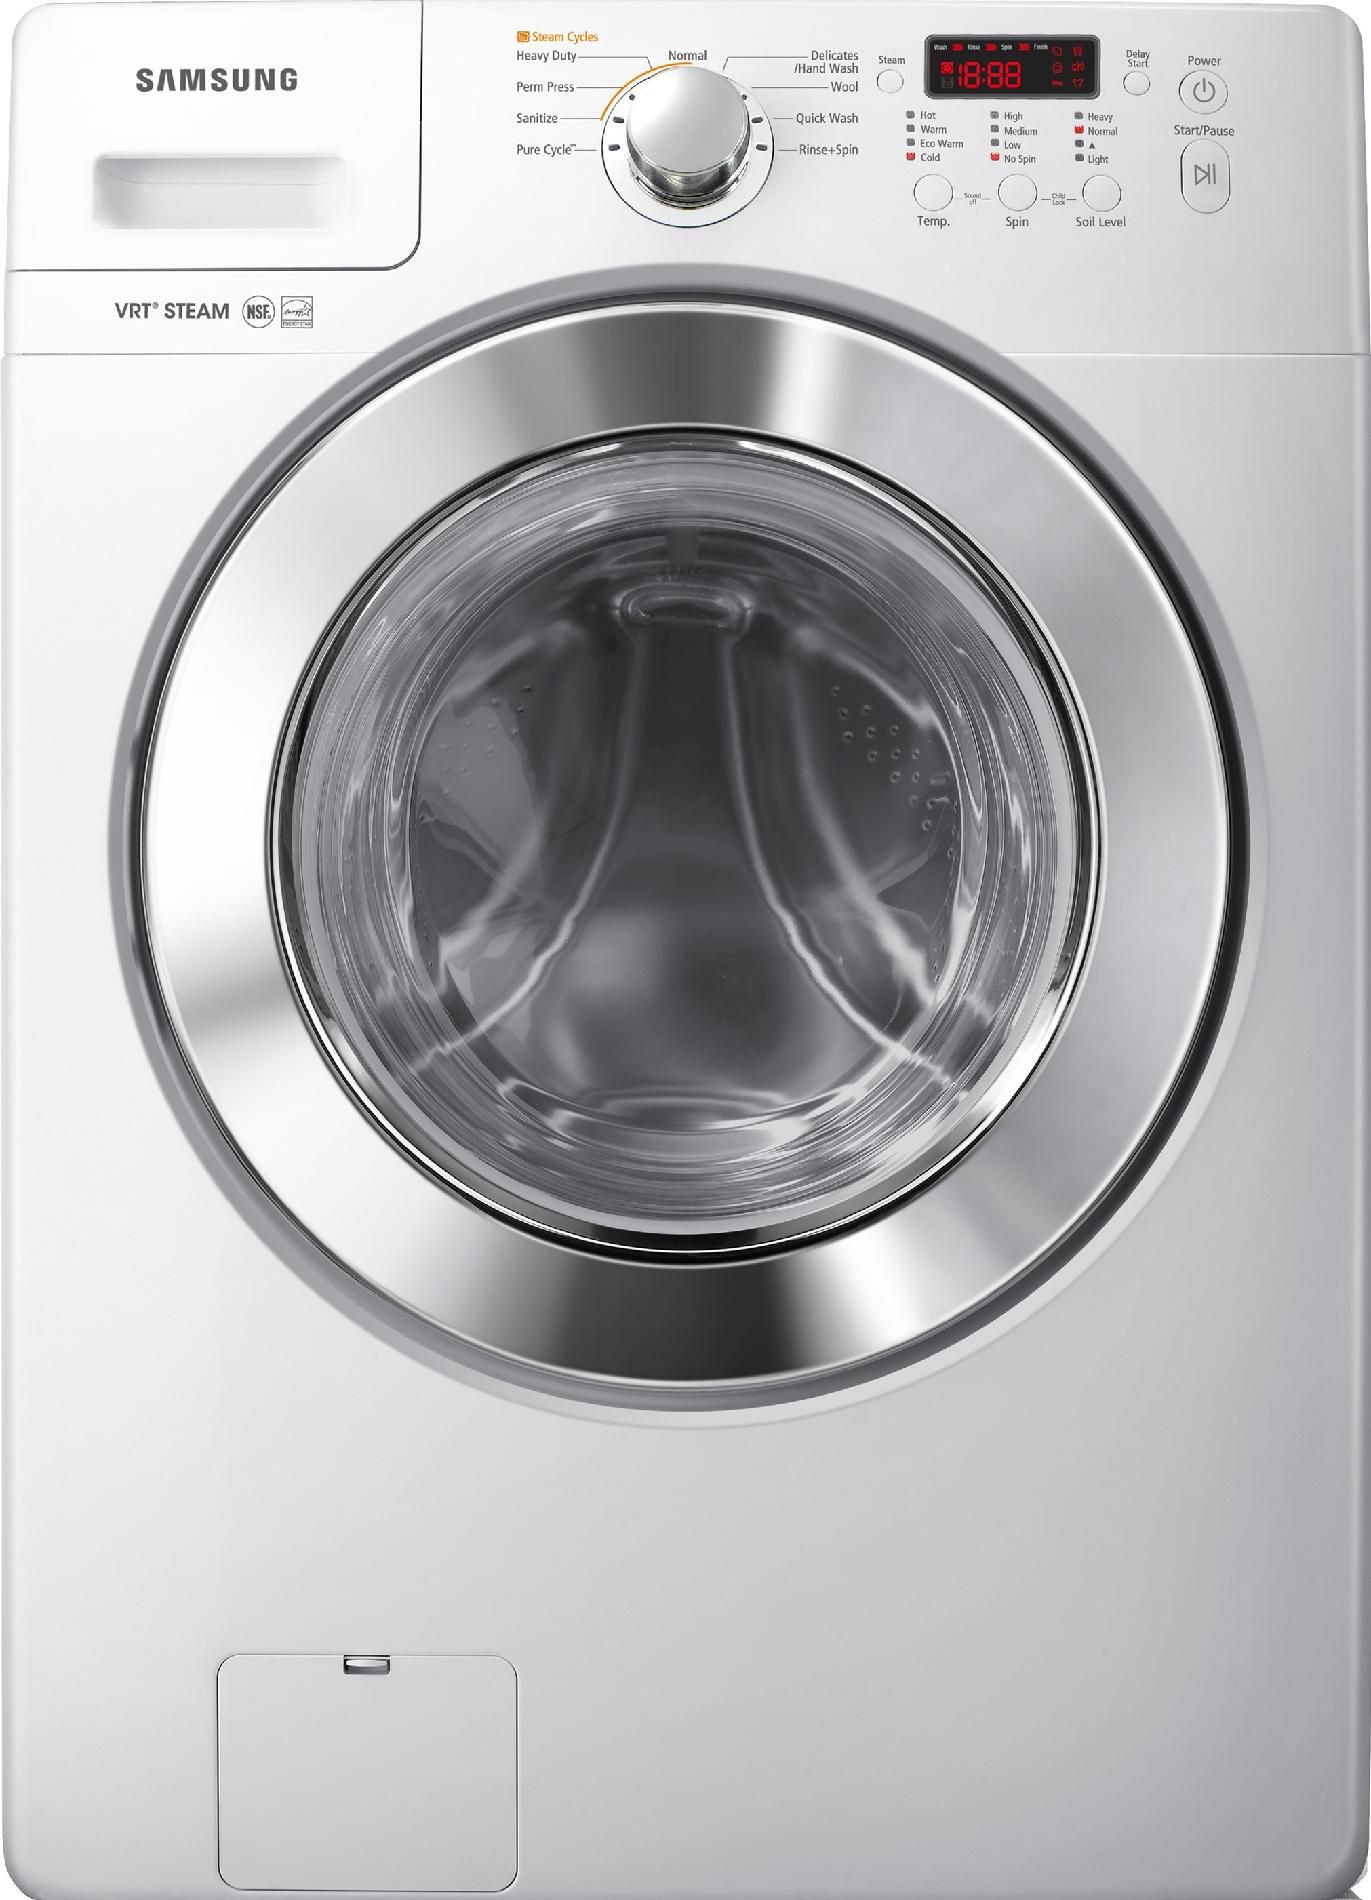 Samsung 3.6 cu. ft. Steam Front-Load Washer - White